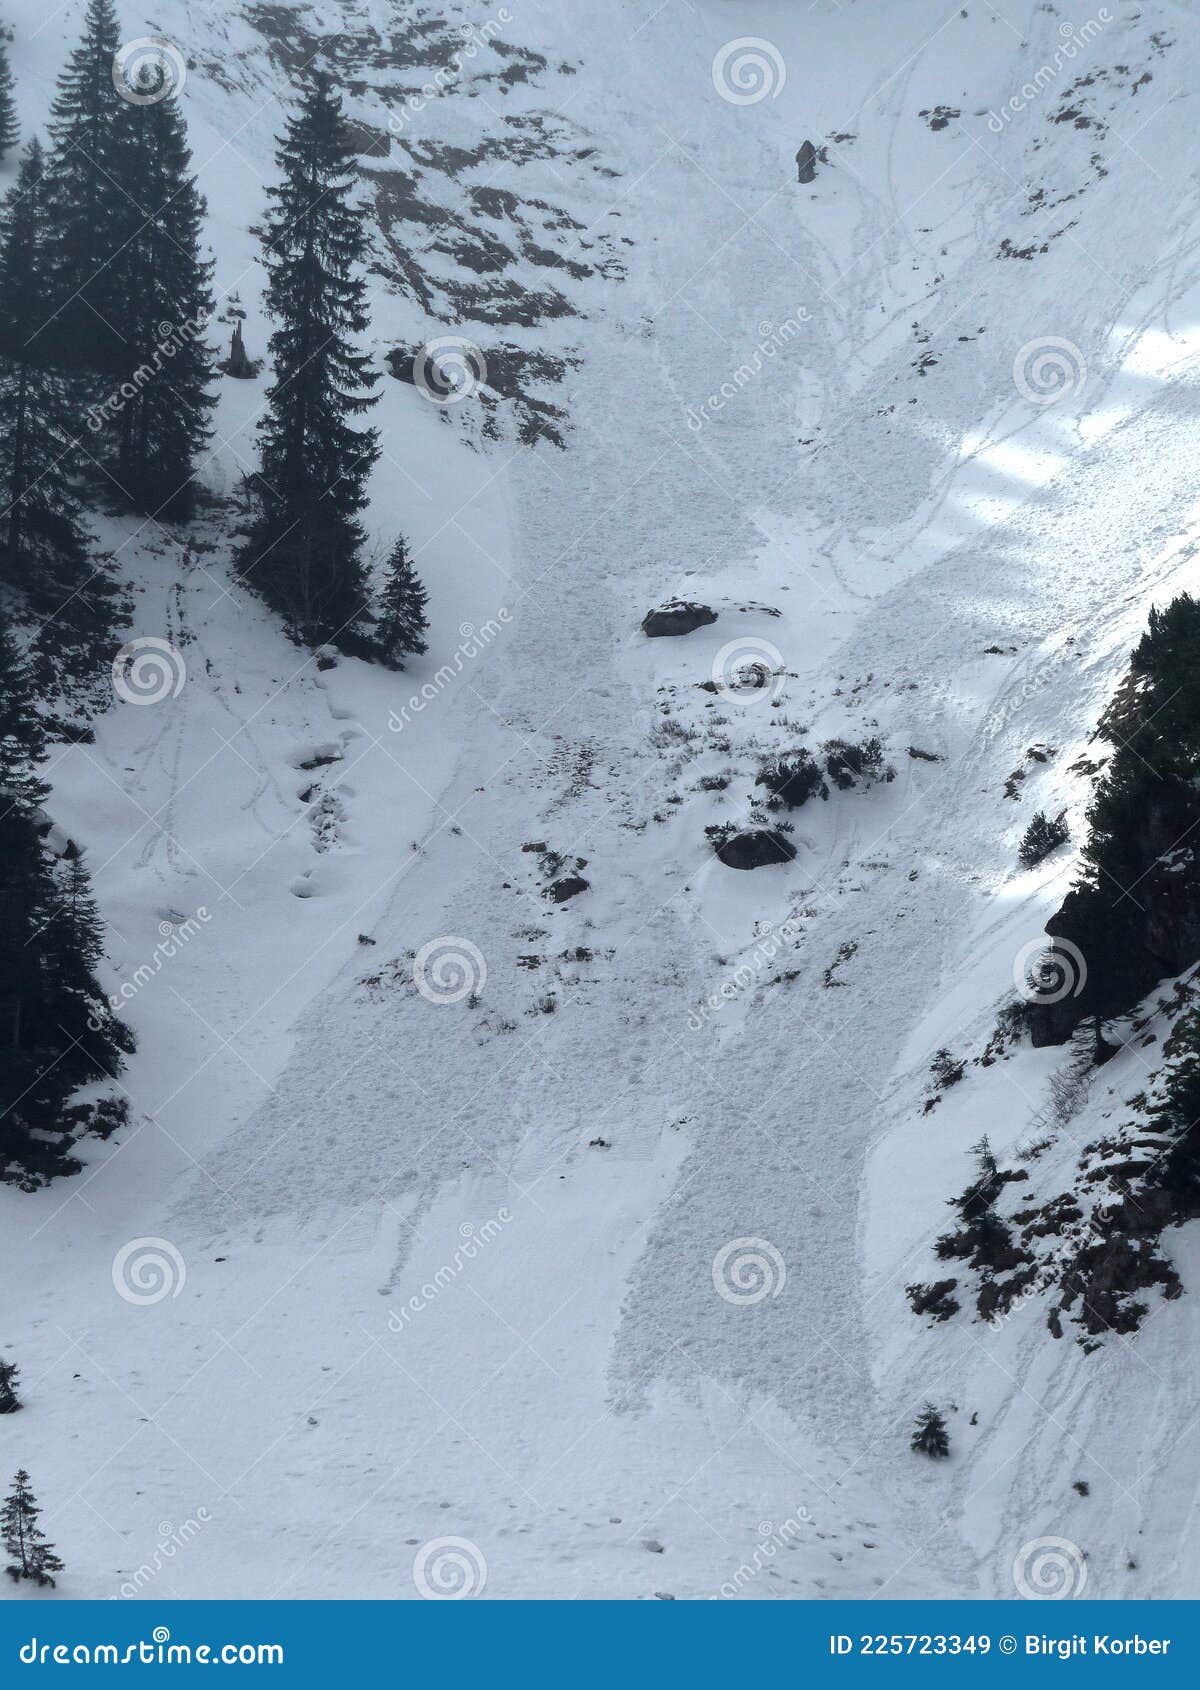 snow avalance in bavarian alps, germany, in wintertime